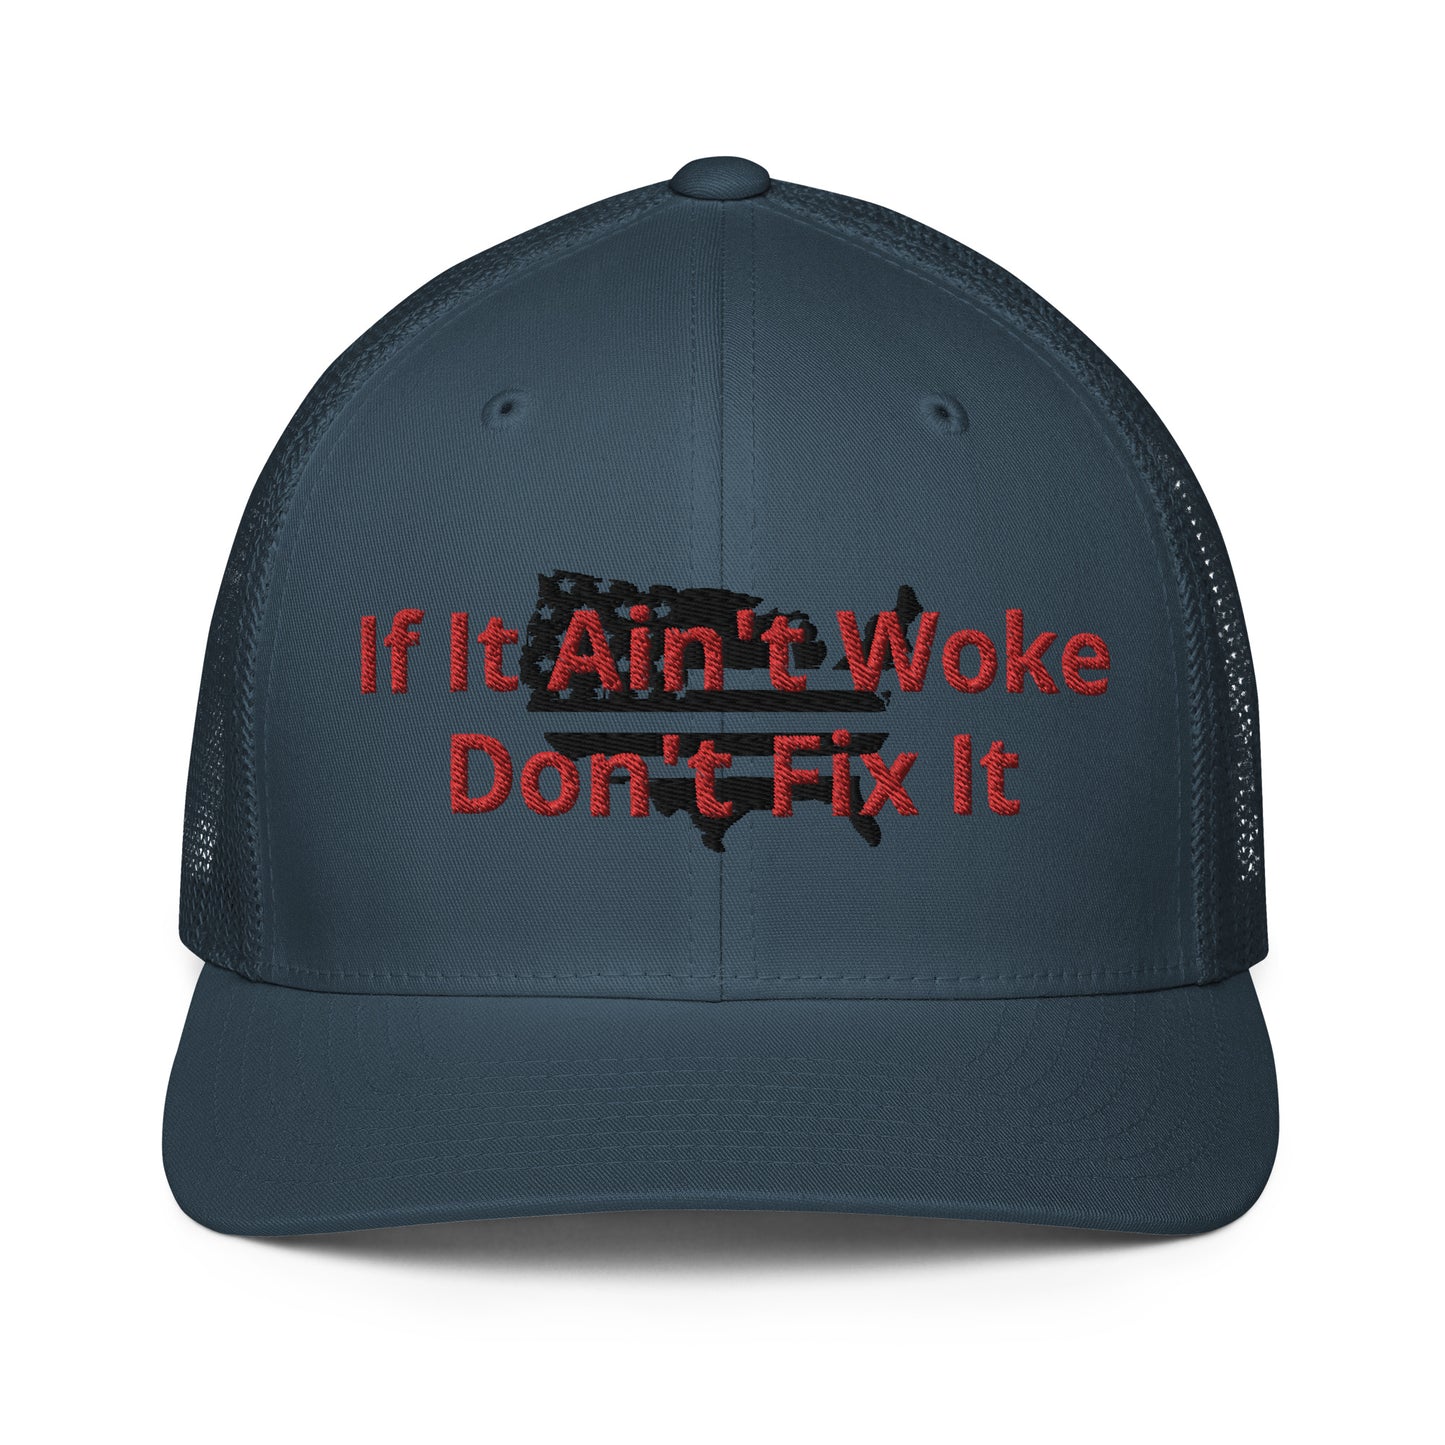 "If It Ain't Broke Don't Fix It" Closed-back trucker cap